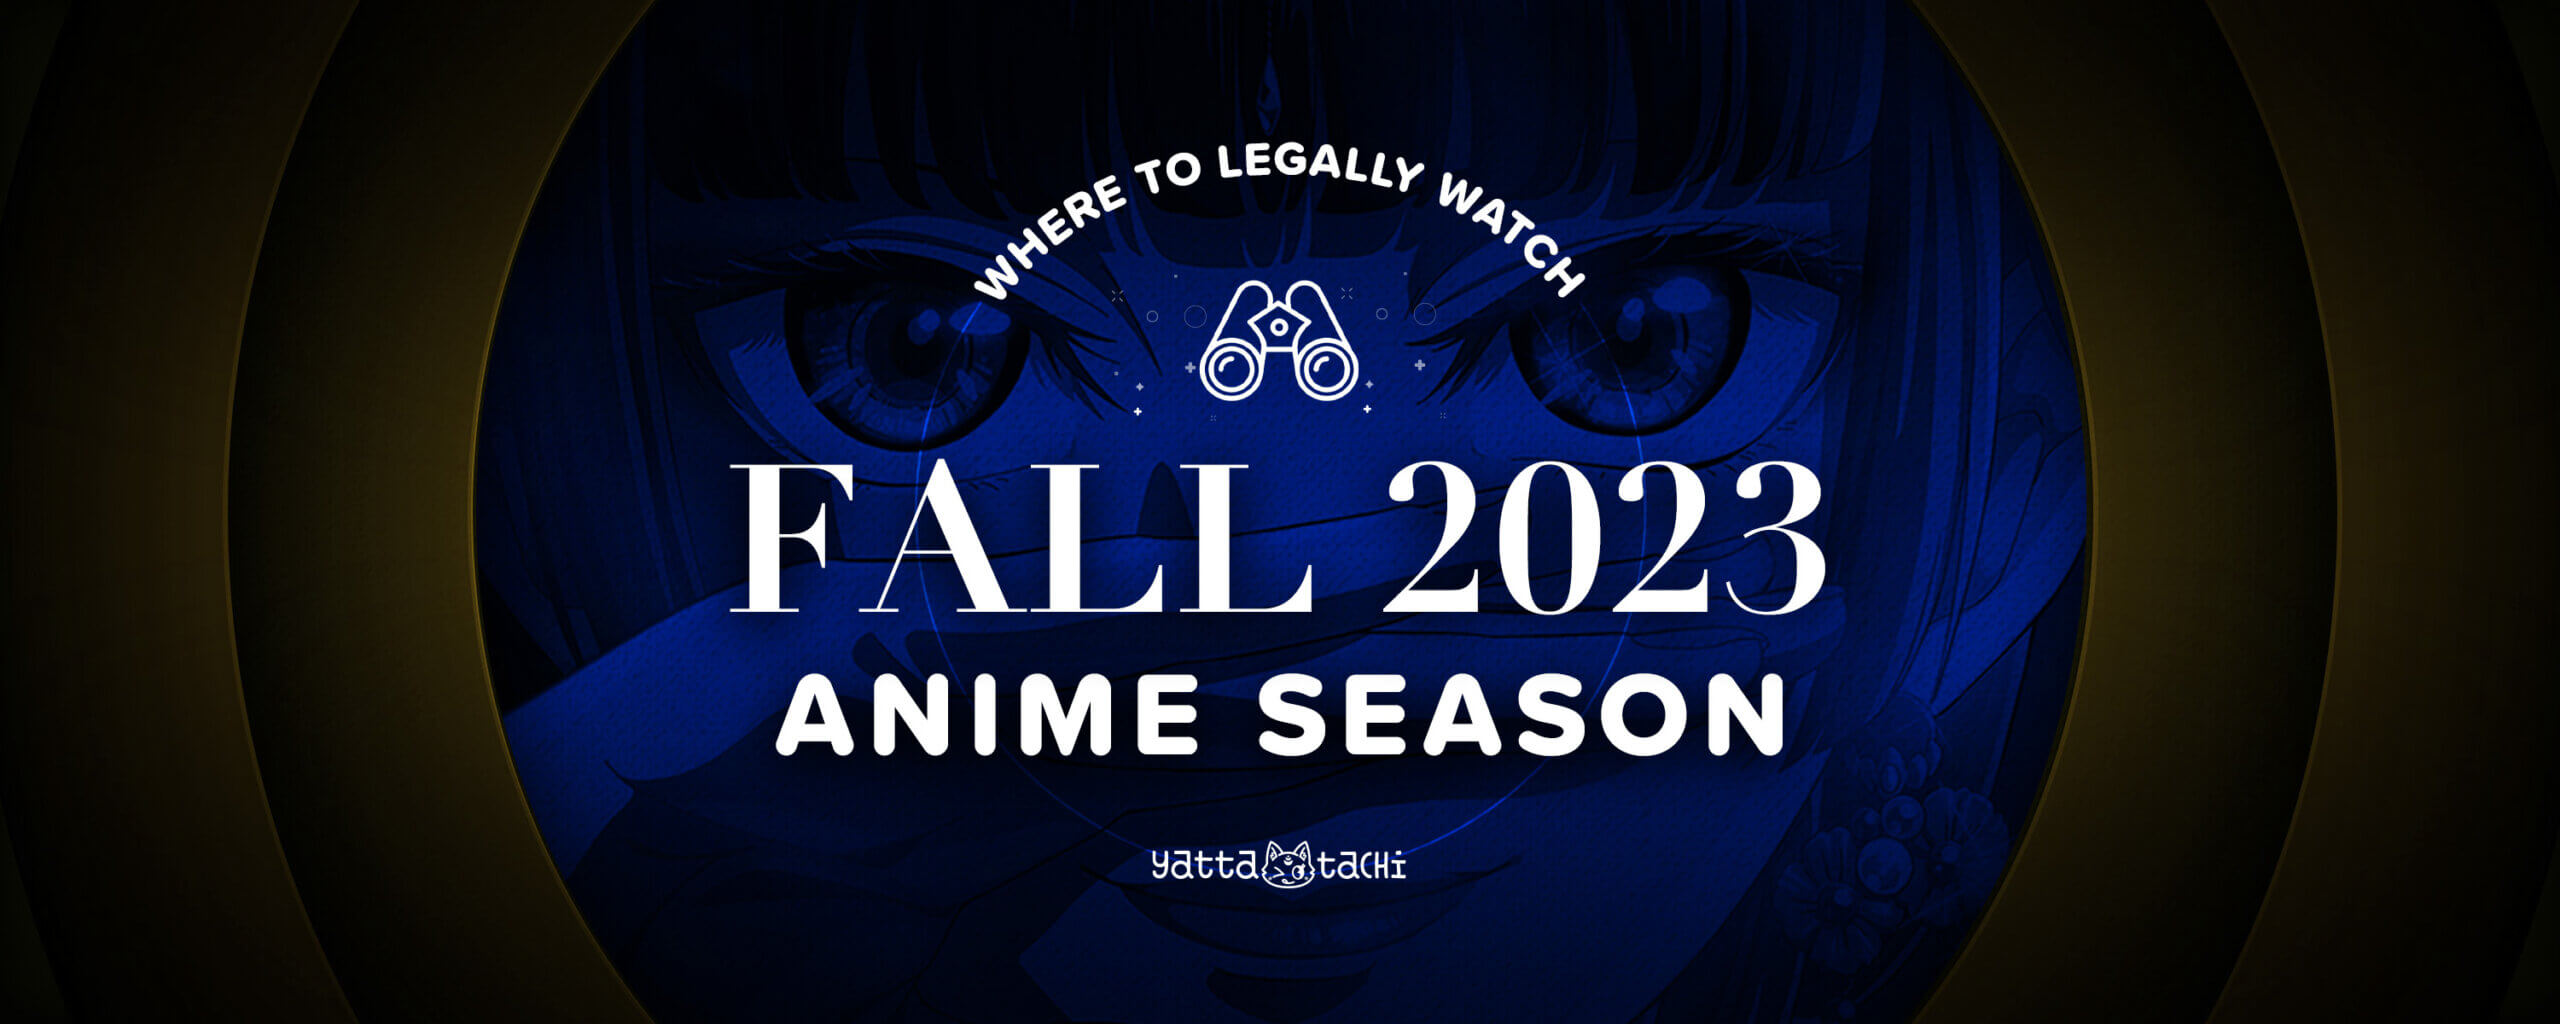 KENGAN ASHURA Season 2 Continues On Netflix in 2024 - Crunchyroll News